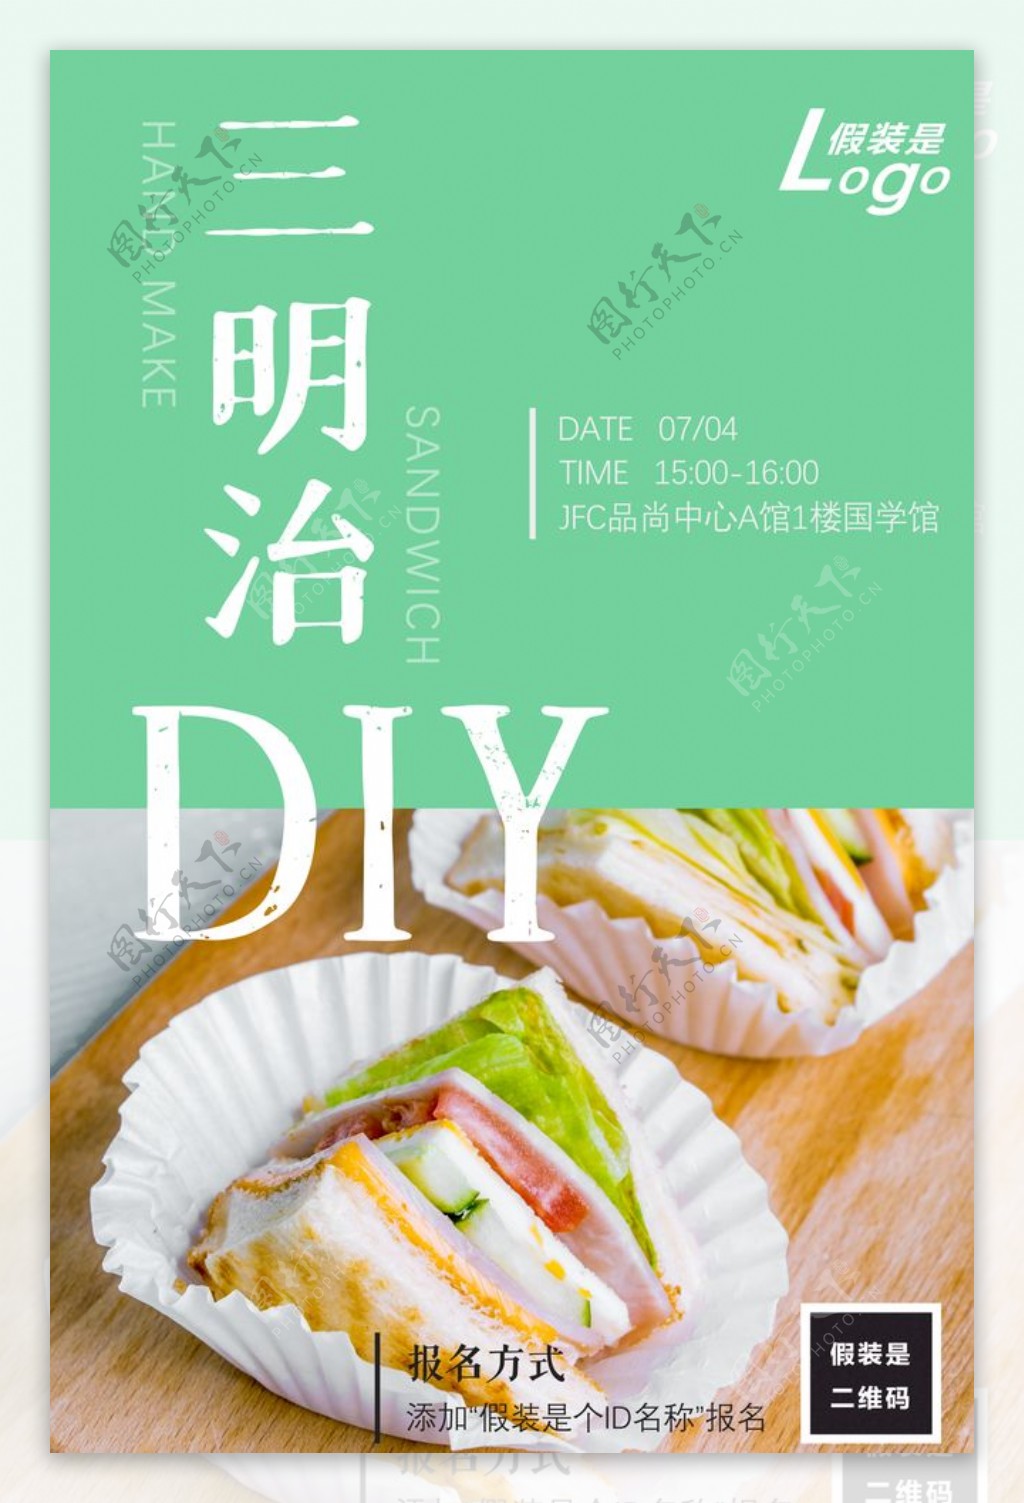 三明治DIY